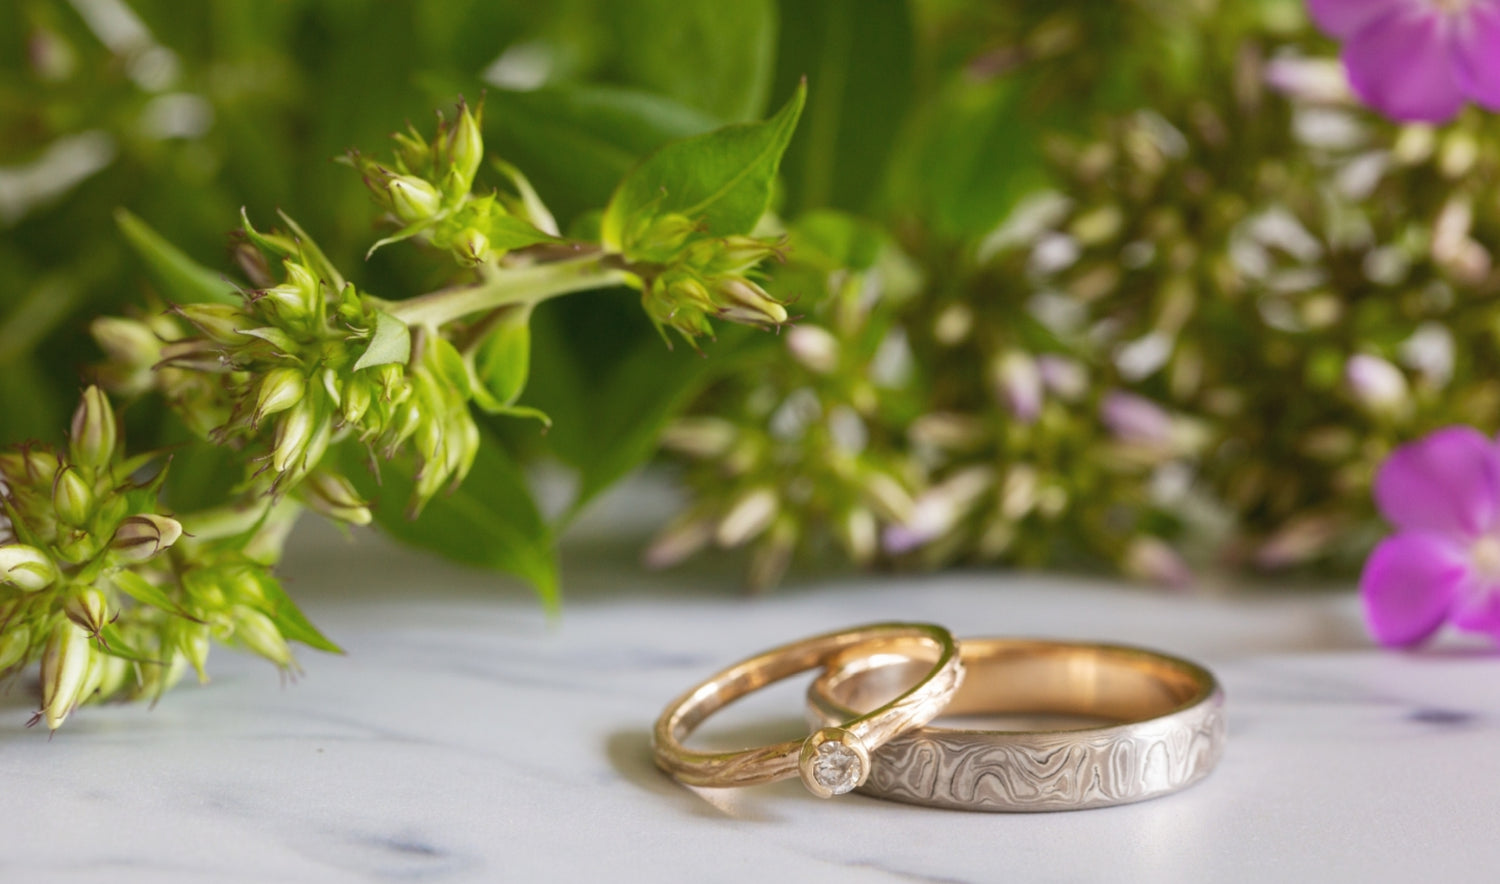 Bespoke Wedding & Engagement Jewellery